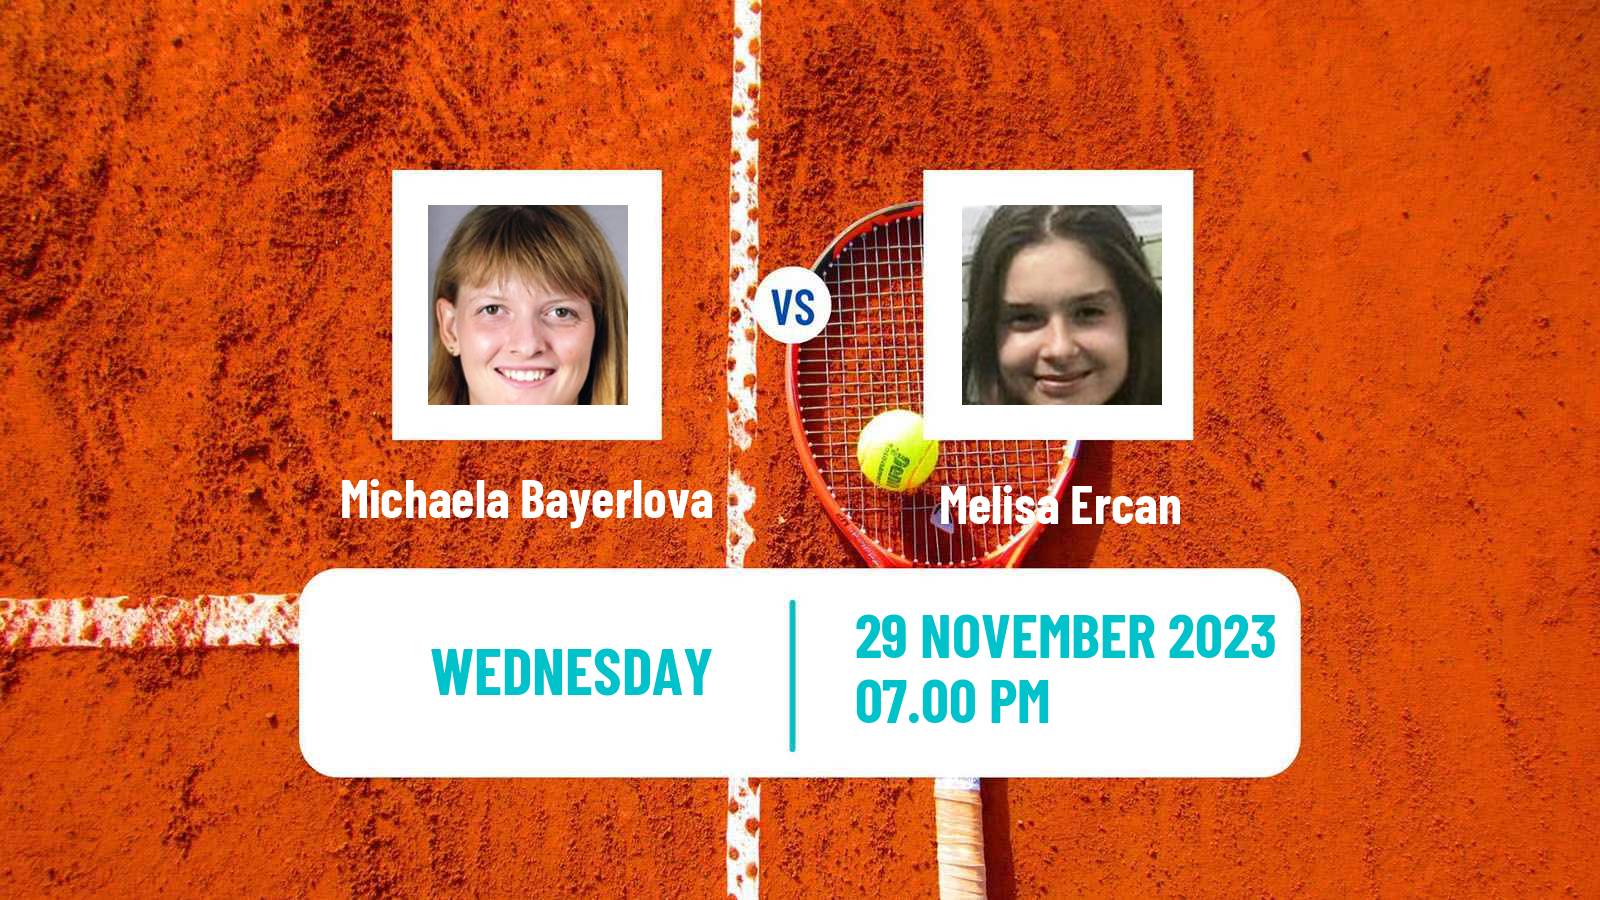 Tennis ITF W60 Gold Coast Women 2023 Michaela Bayerlova - Melisa Ercan